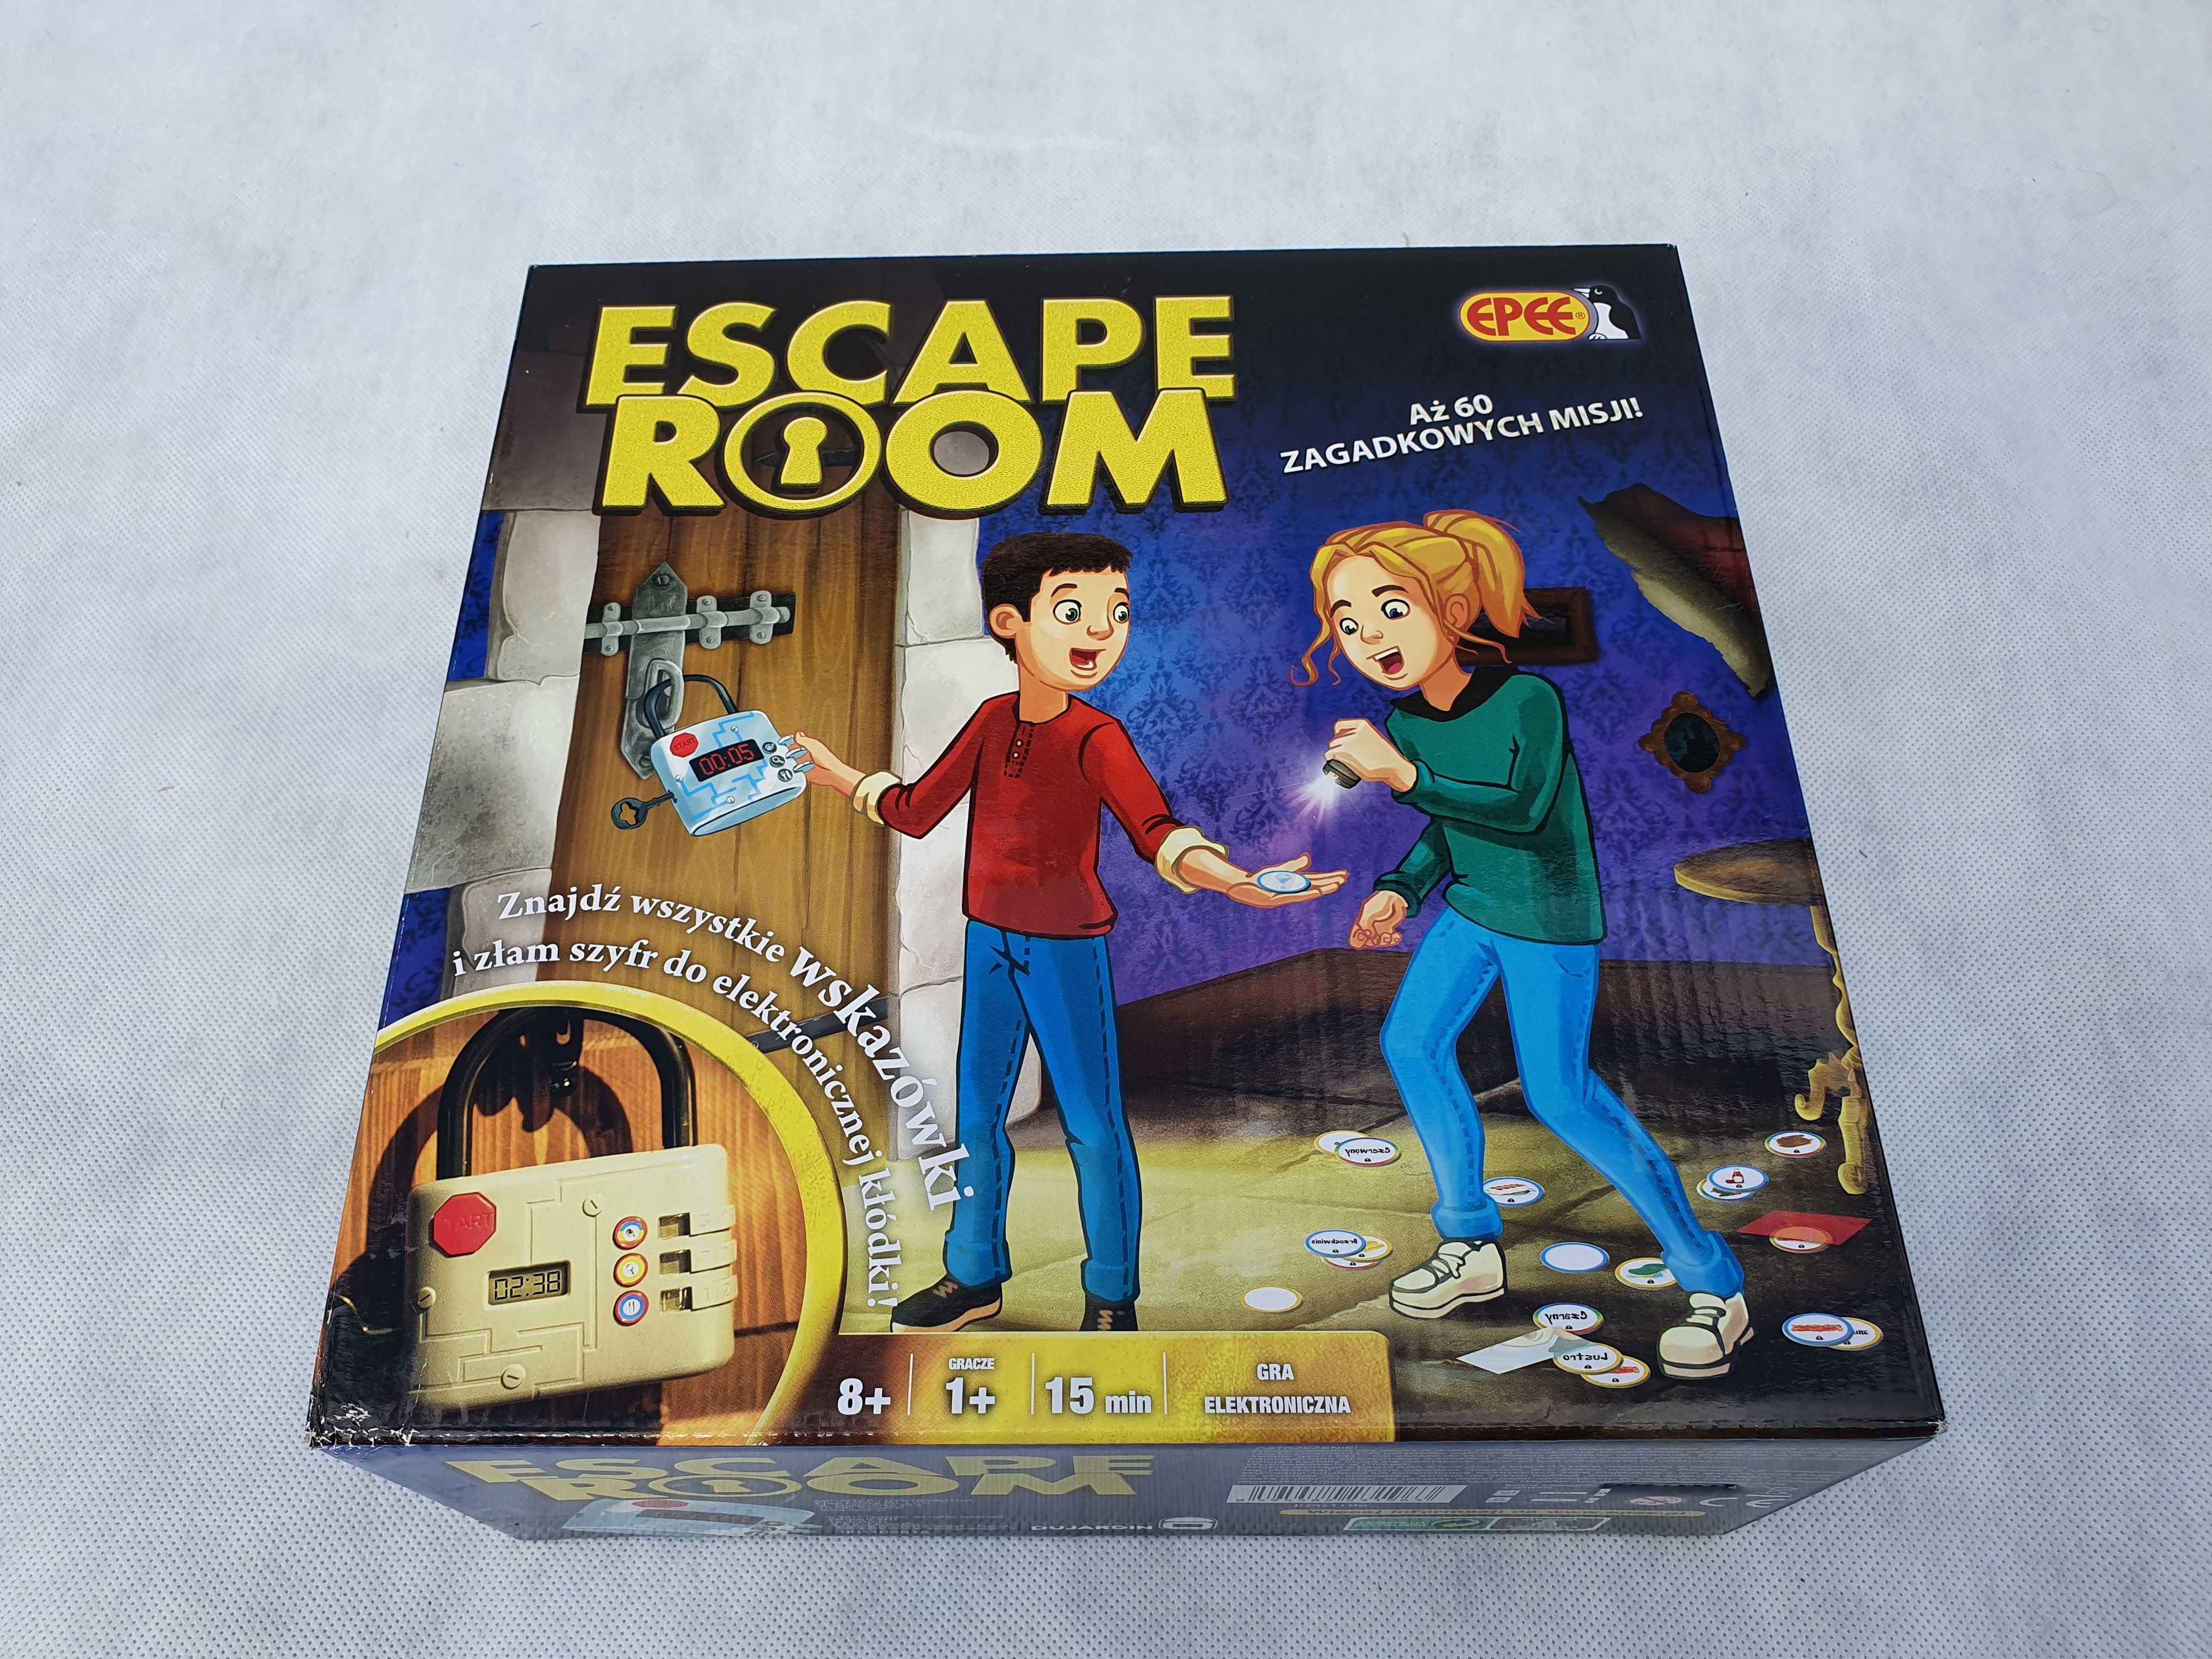 Escape room (familijna gra logiczna)